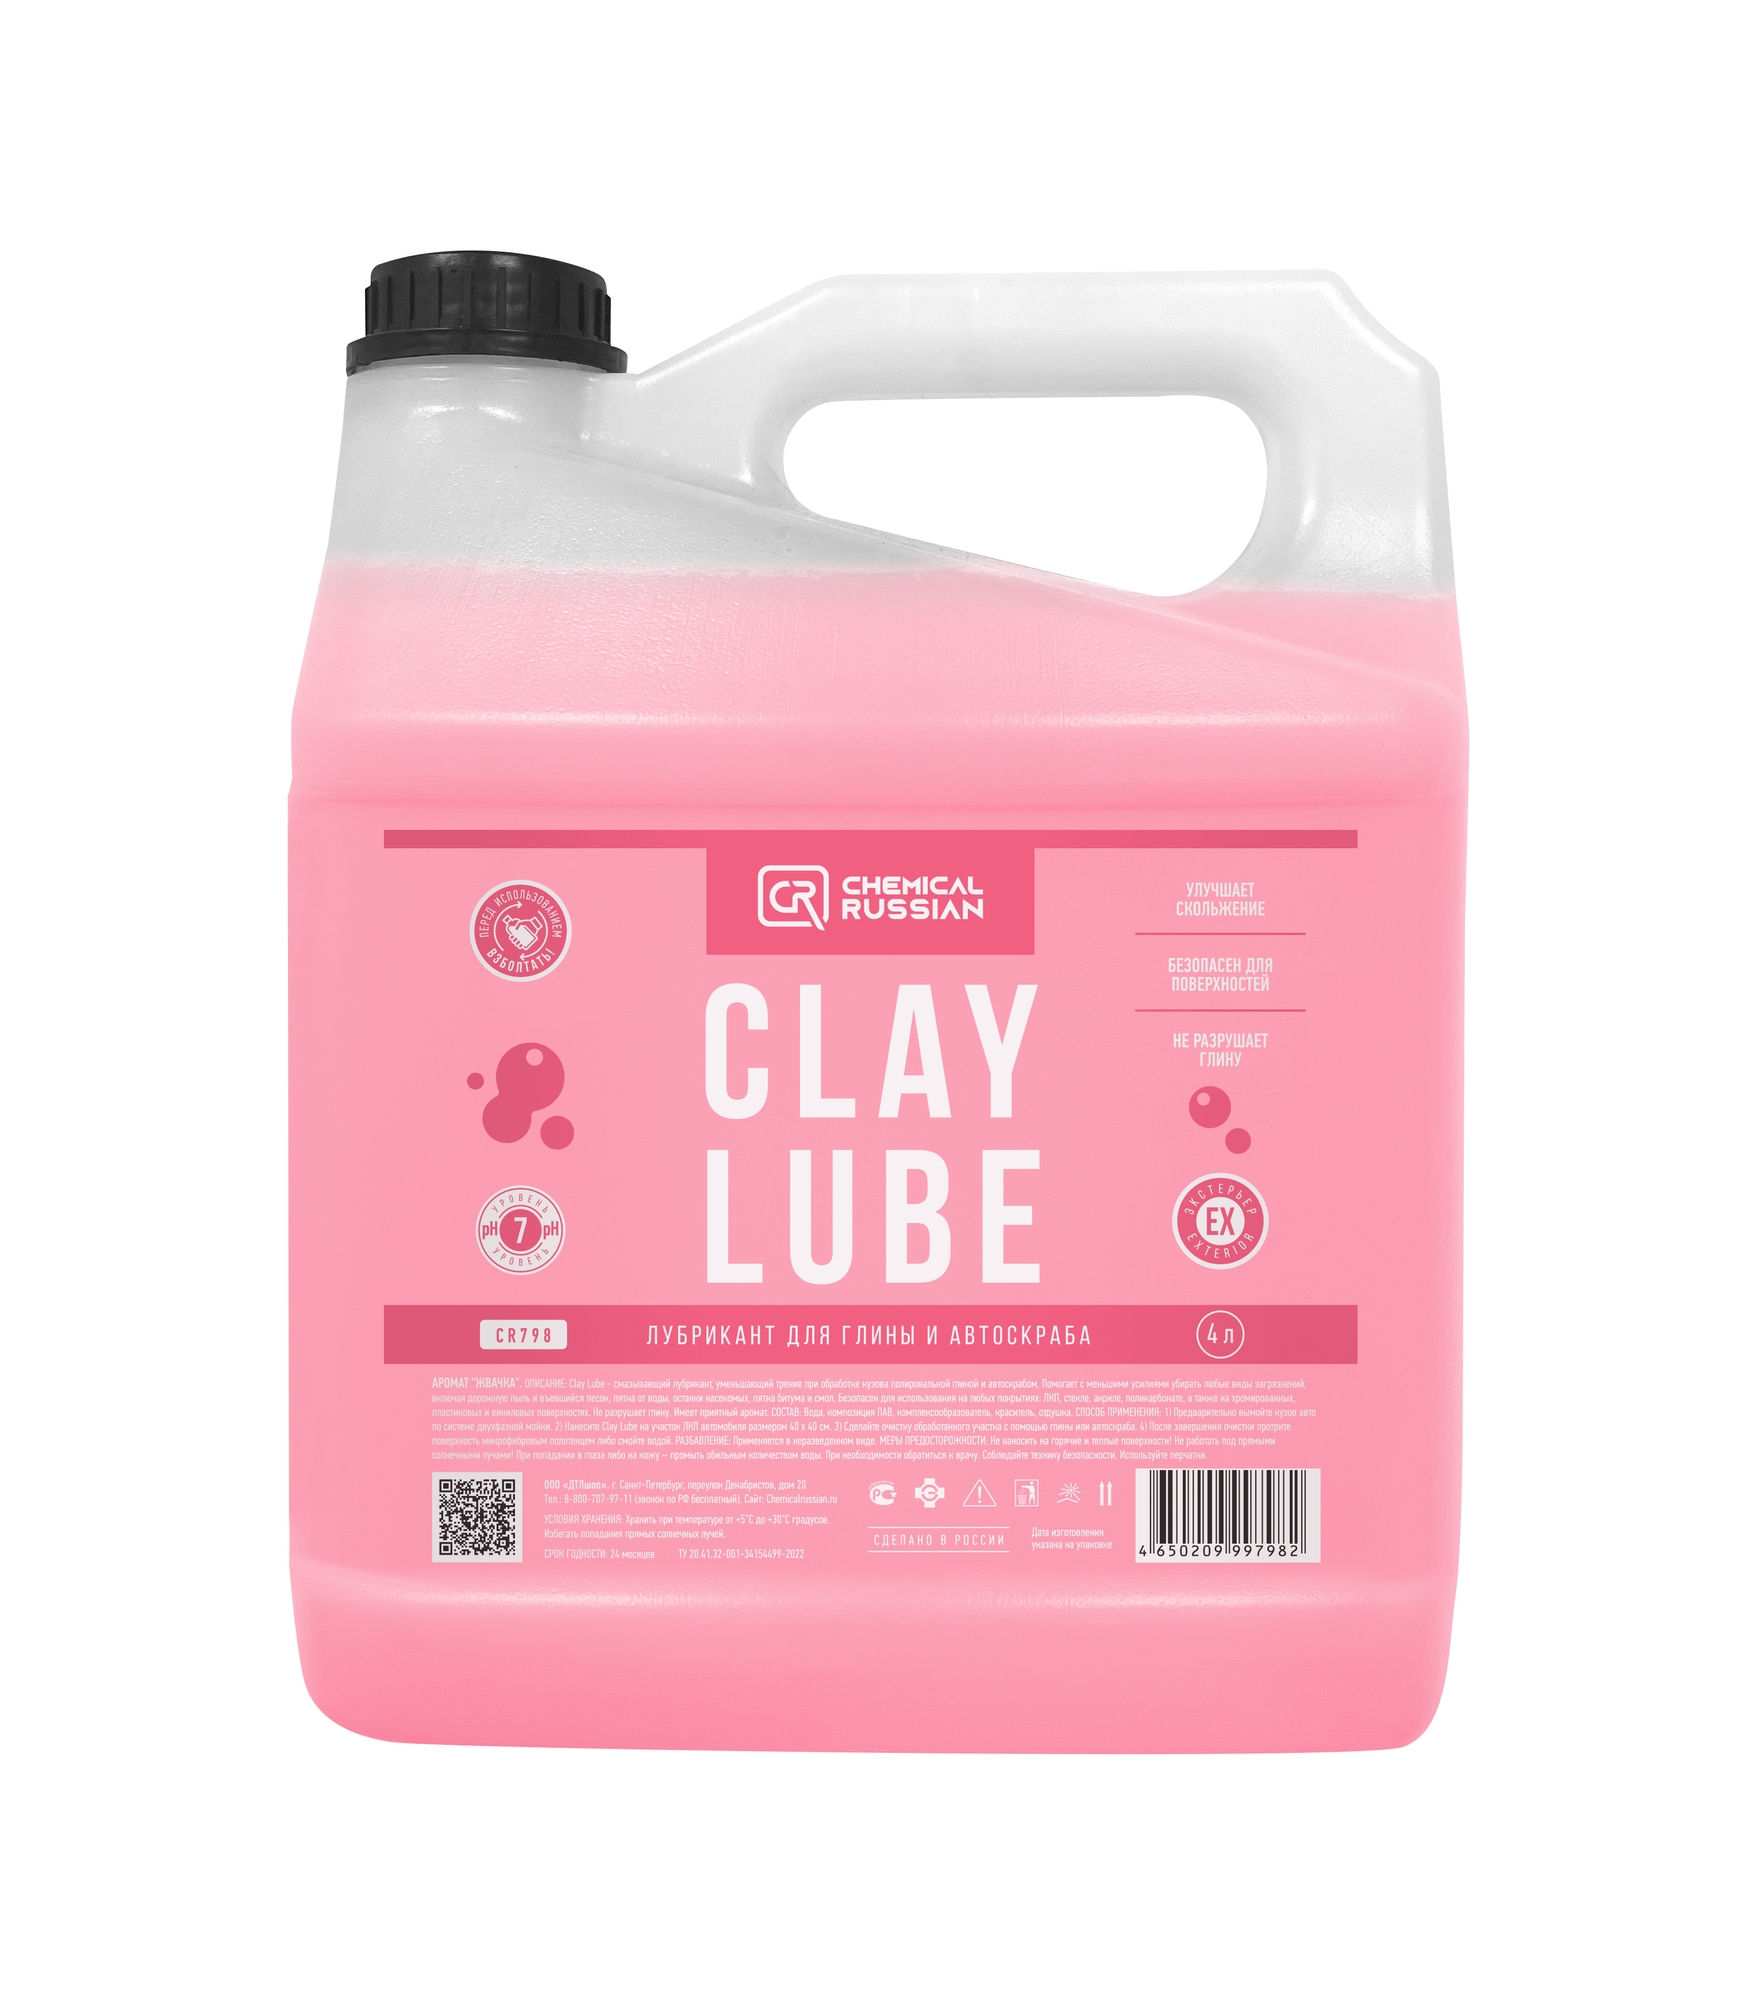 Лубрикант для полировочной глины - Clay Lube, 4 л, Chemical Russian